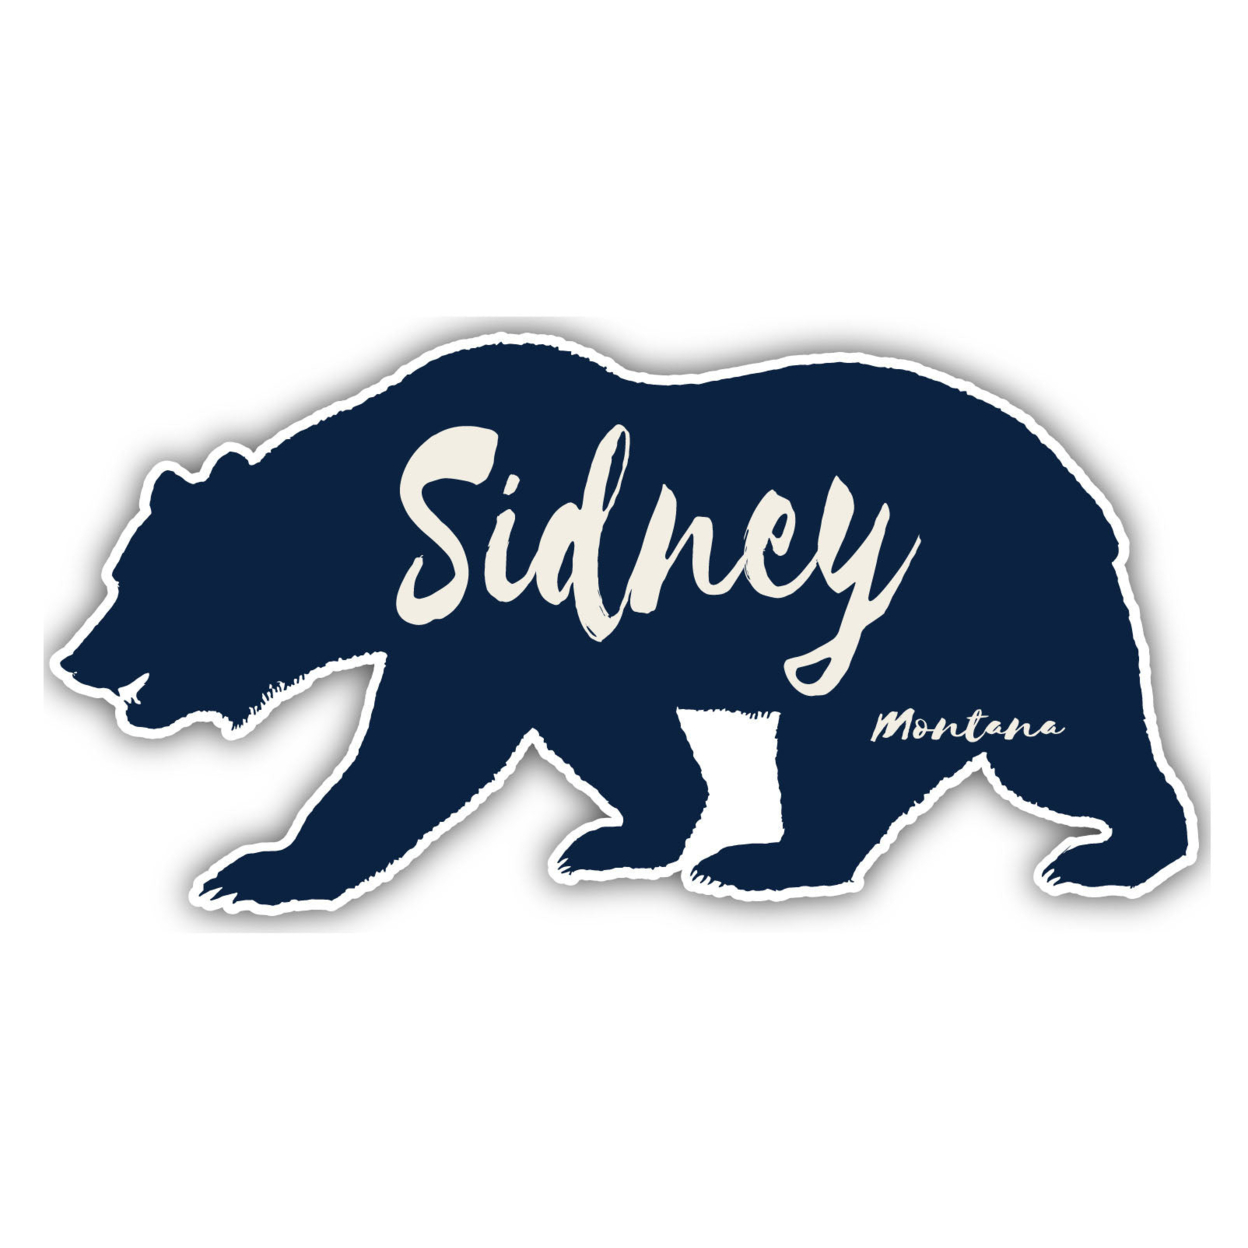 Sidney Montana Souvenir Decorative Stickers (Choose Theme And Size) - Single Unit, 4-Inch, Bear